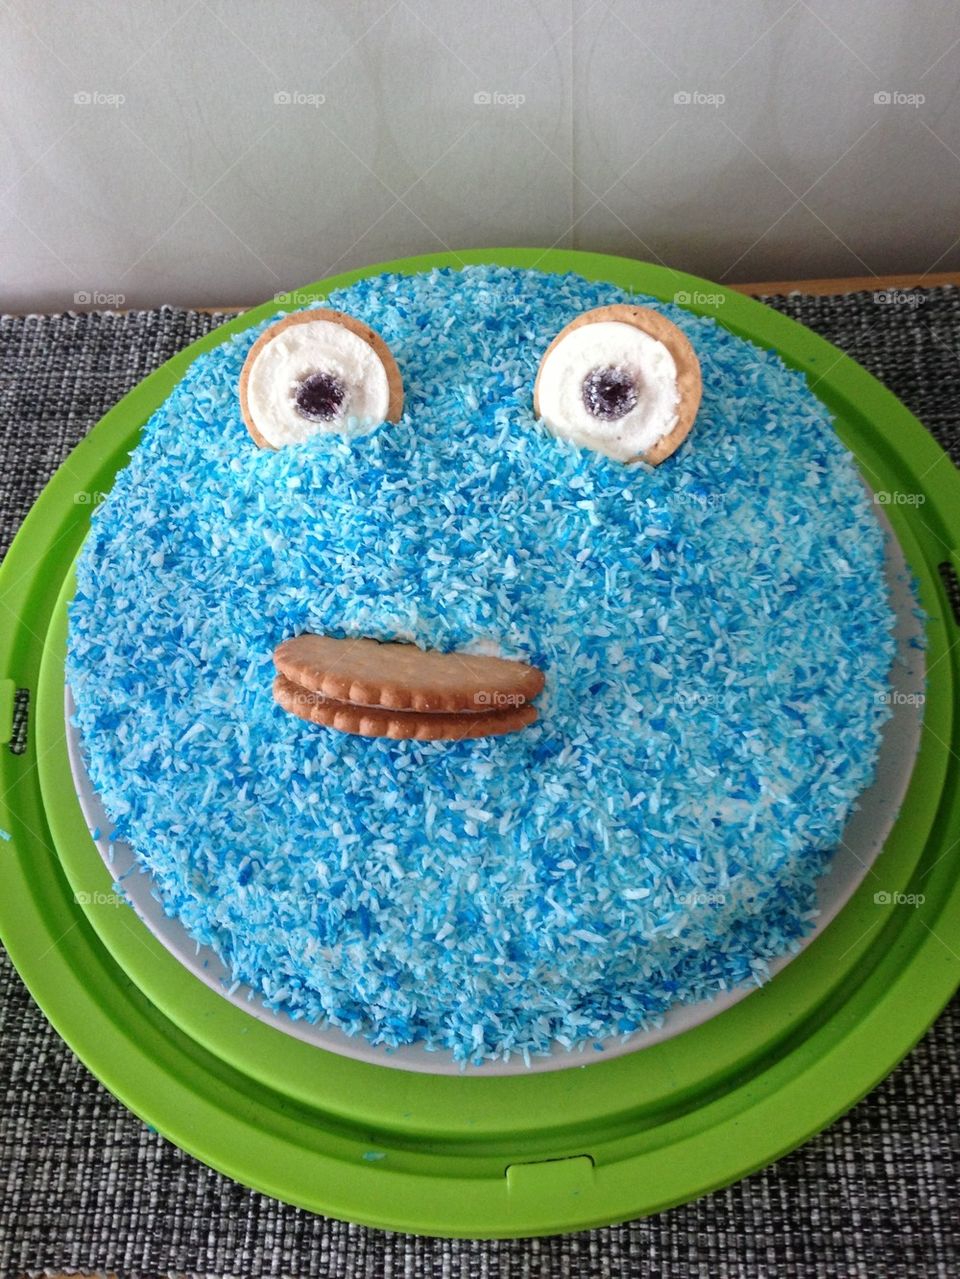 sweden cake blue karlskrona by malinryke